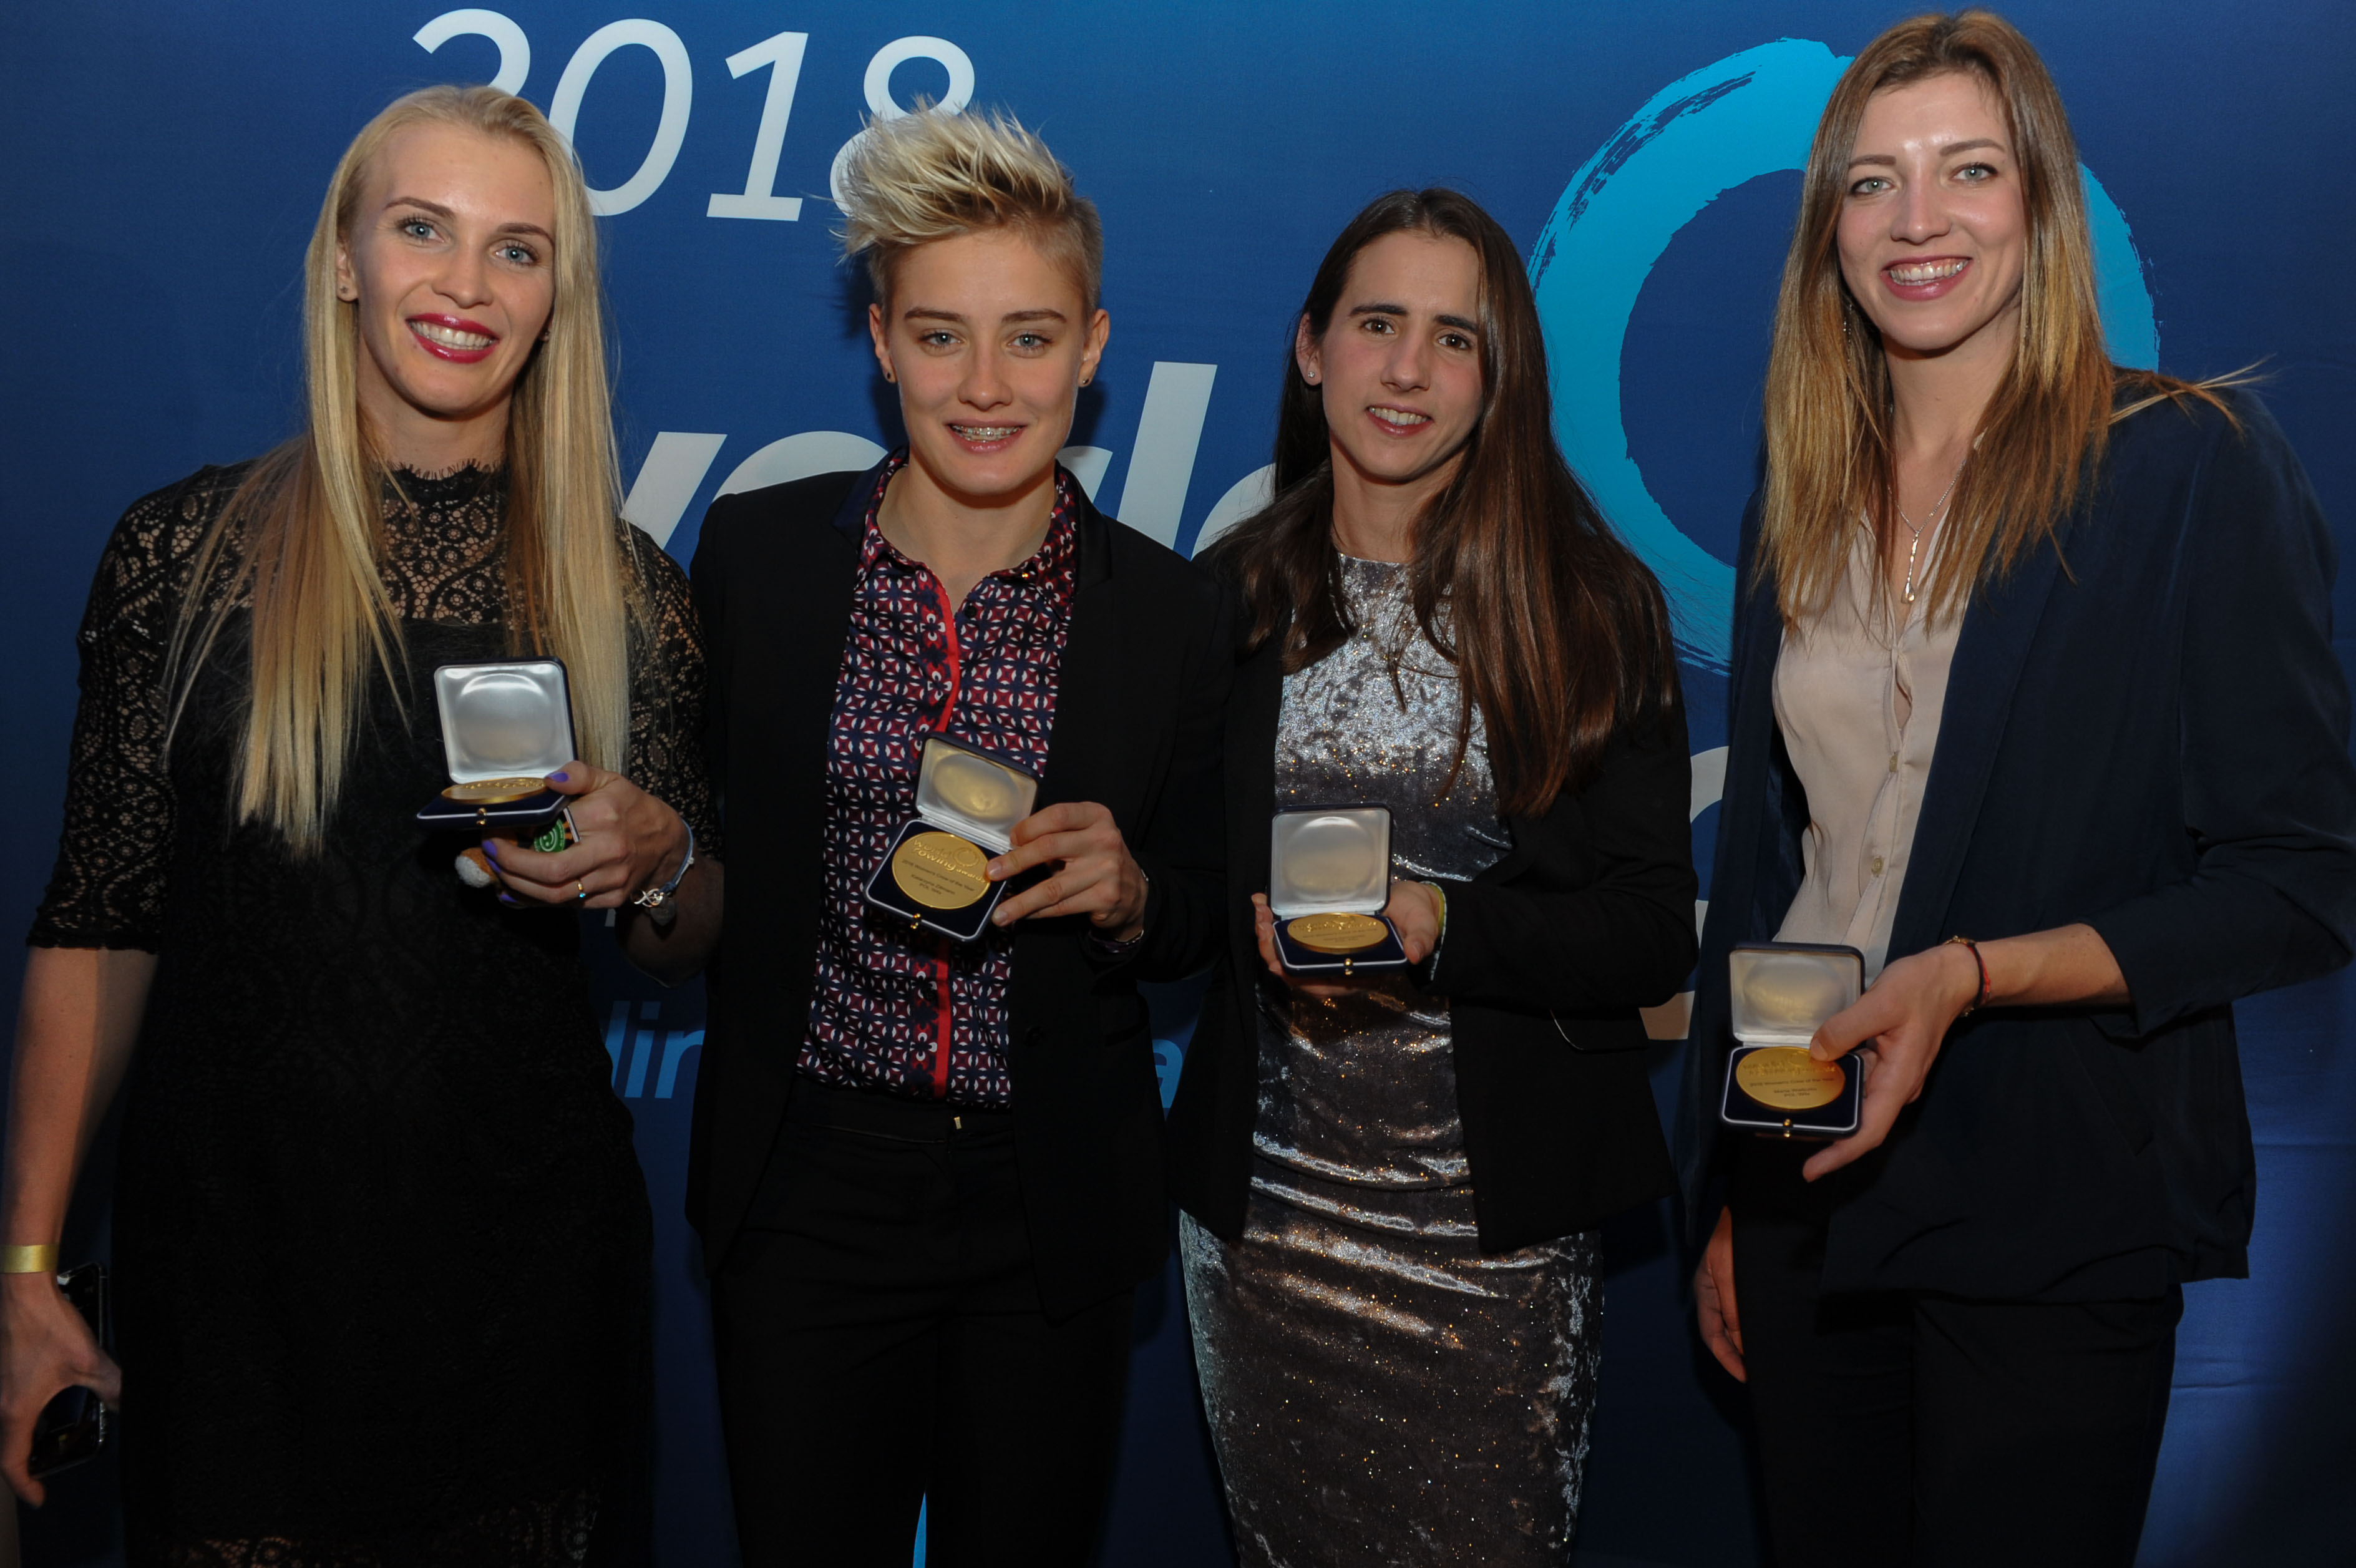 2018 World Rowing Awards Berlin 23.11.2018 2427